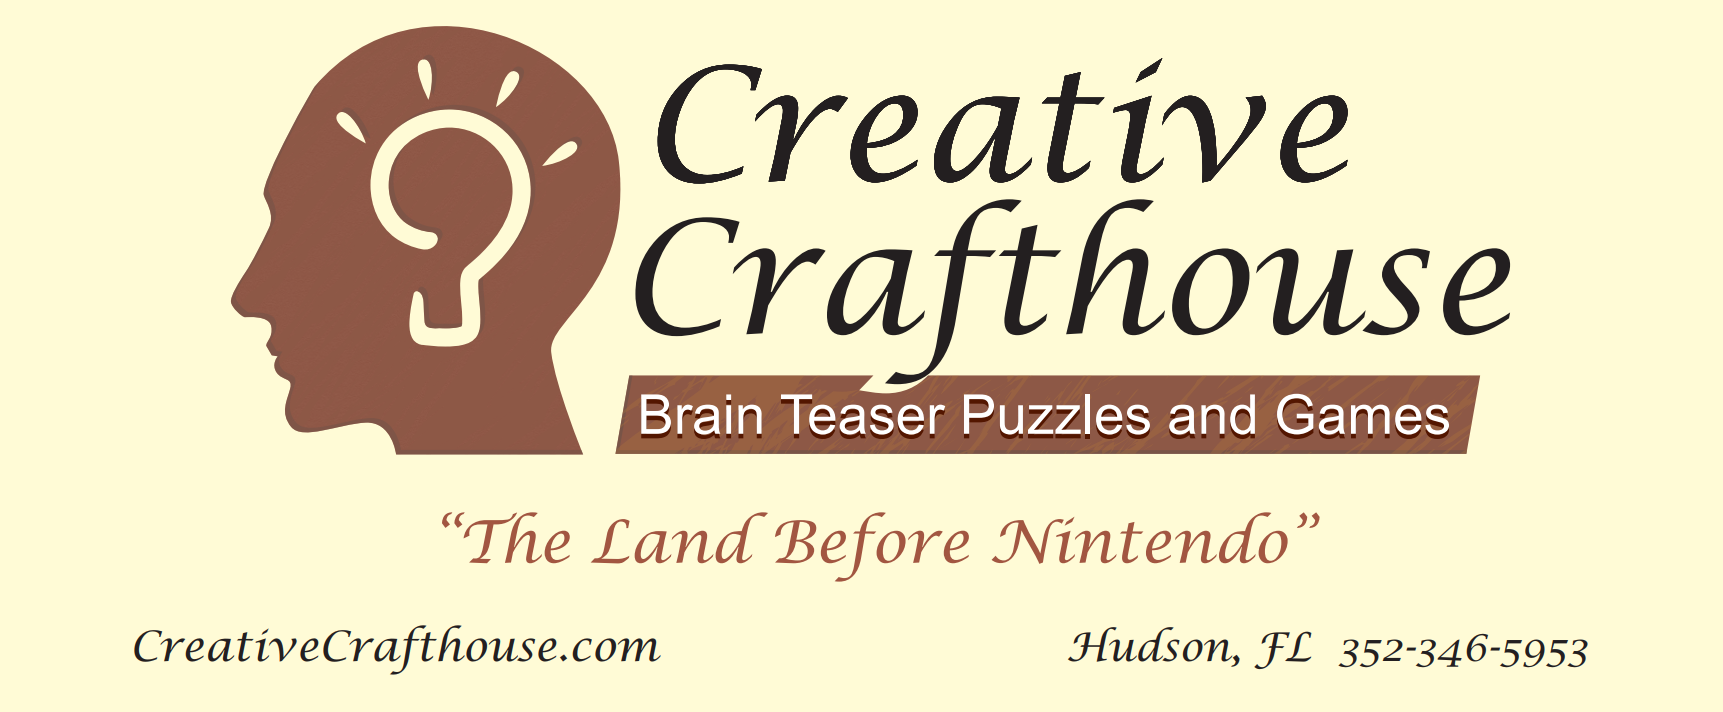 Creative Crafthouse Blog